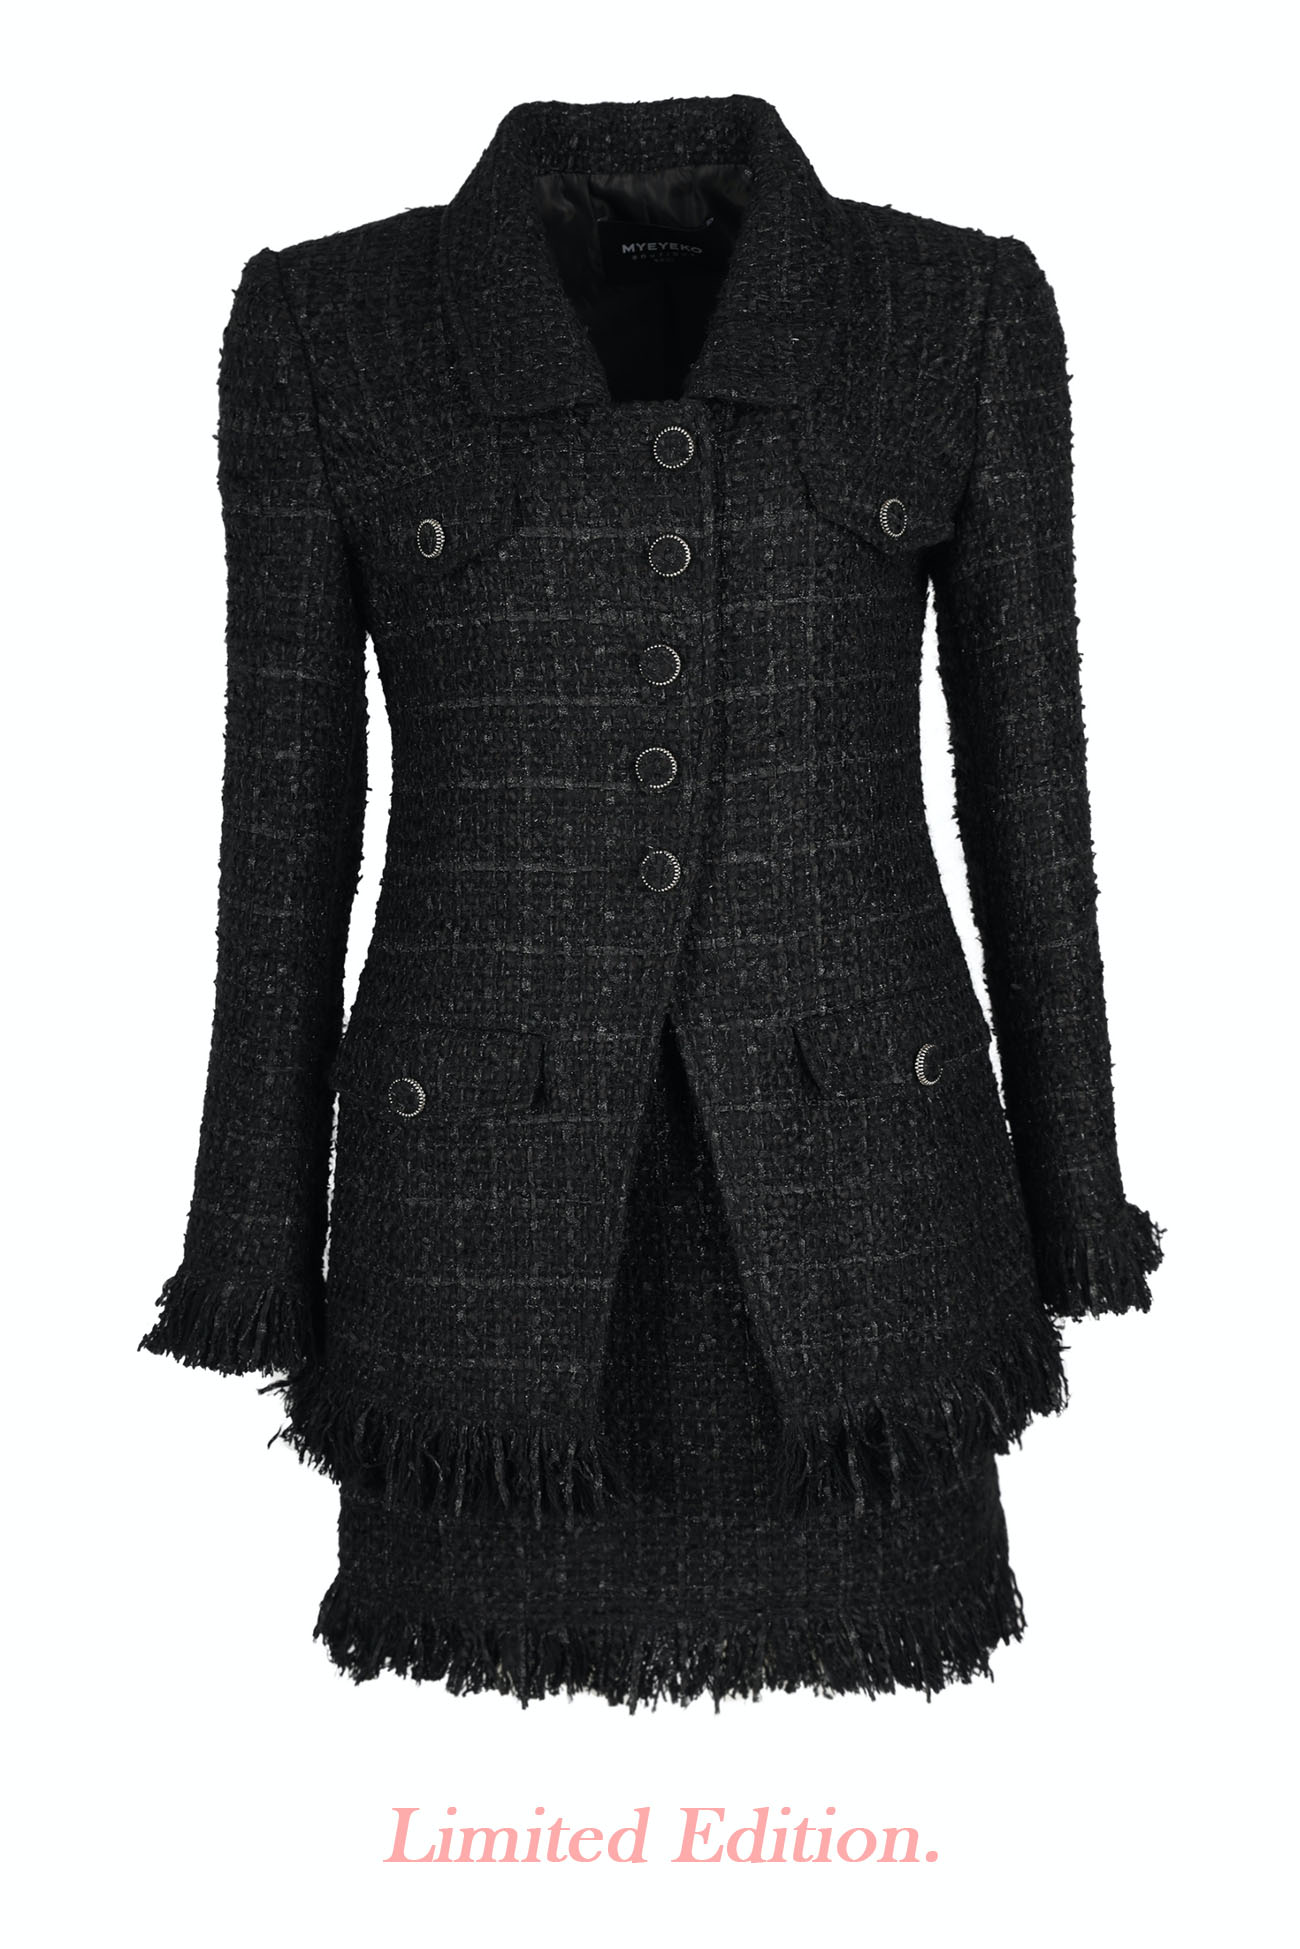 HIGH QUALITY LINE - Black Special Tweed Fringe Jacket &amp; Skirt  [LIMITED EDITION. ]